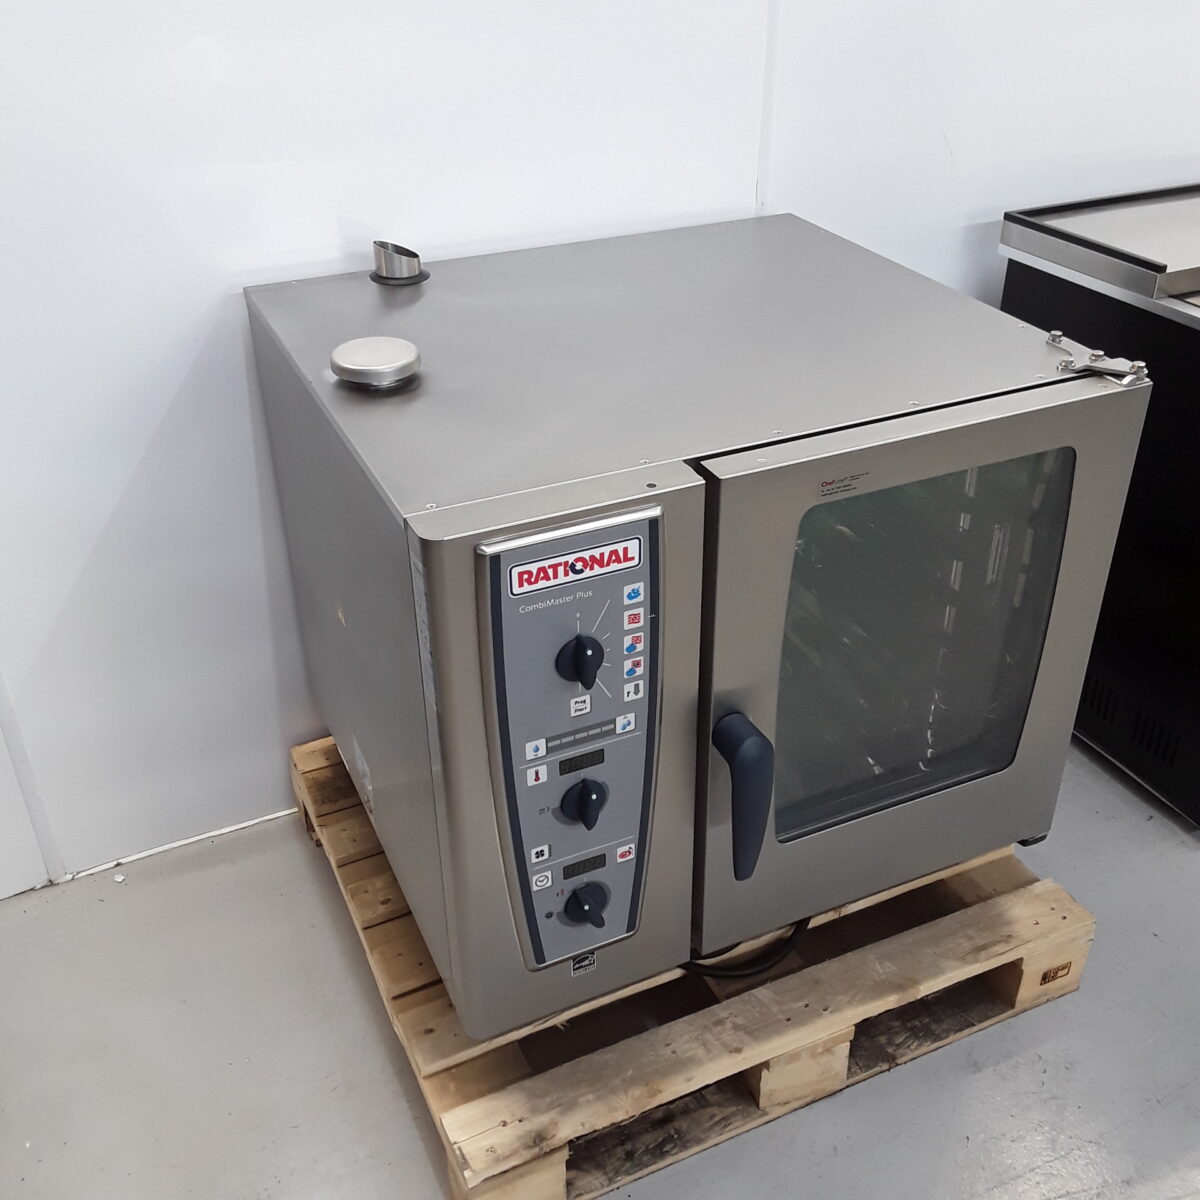 New B Grade Rational CM61 Combimaster Oven 85cmW x 77cmD x 78cmH